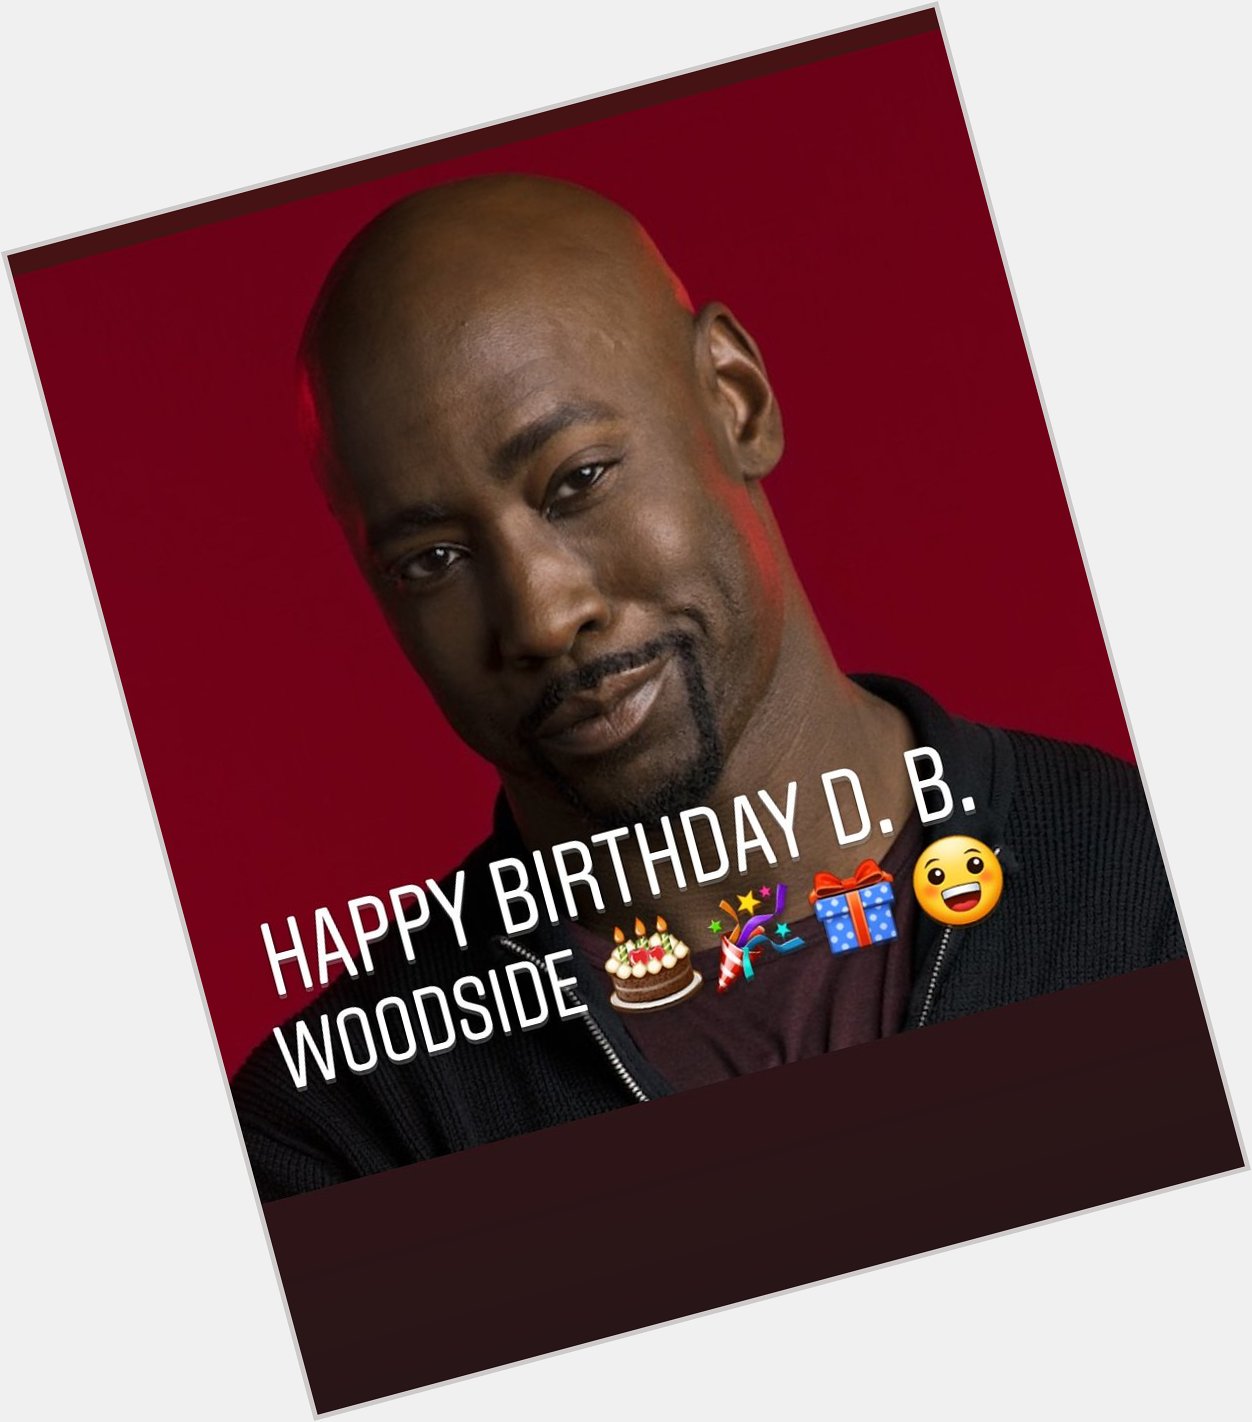   Happy Birthday D. B. Woodside    . 